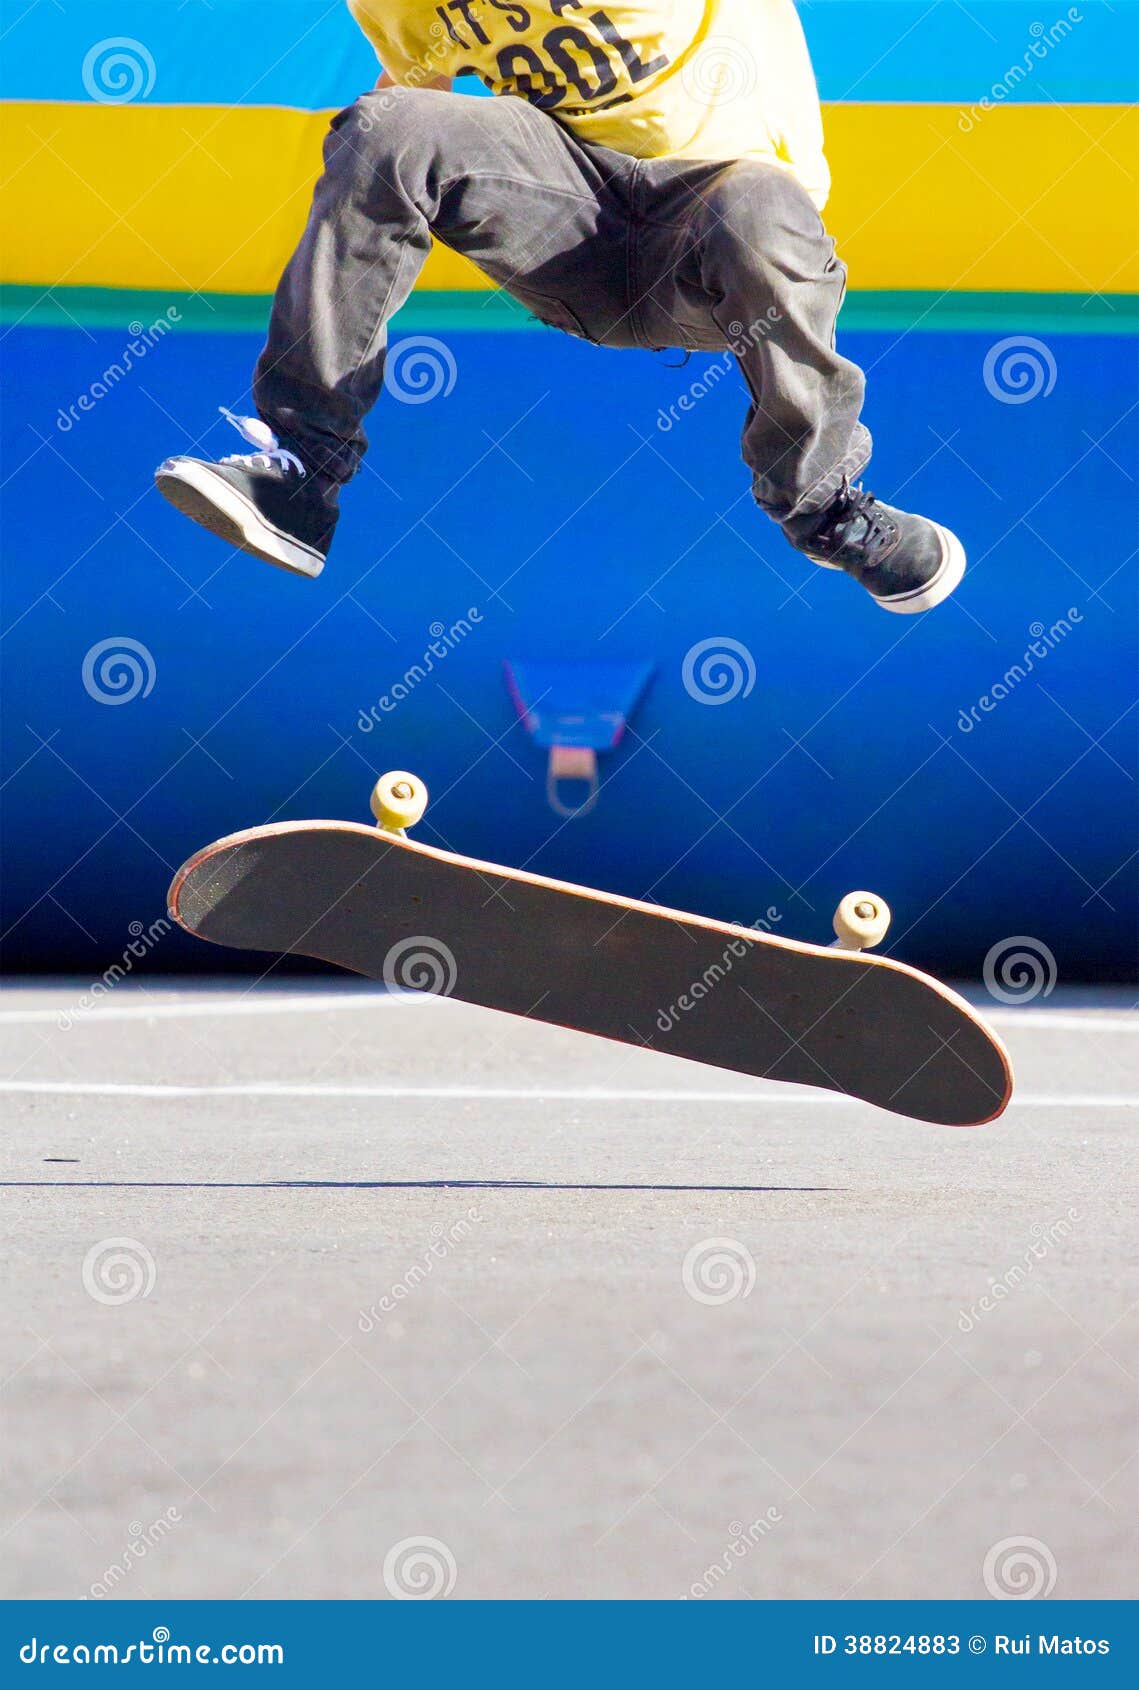 Skater stock image. Image of closeup, background, rolmat - 38824883